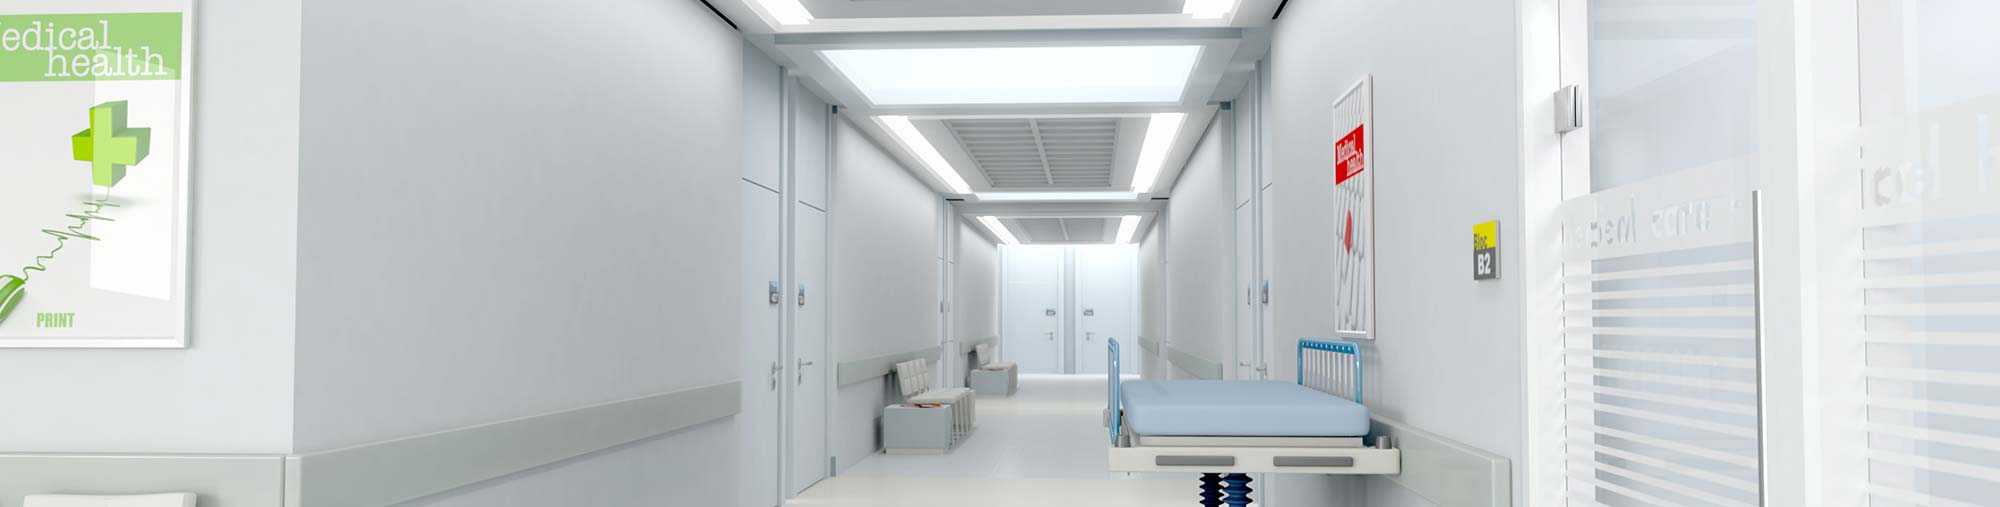 Hallway of a hospital wing